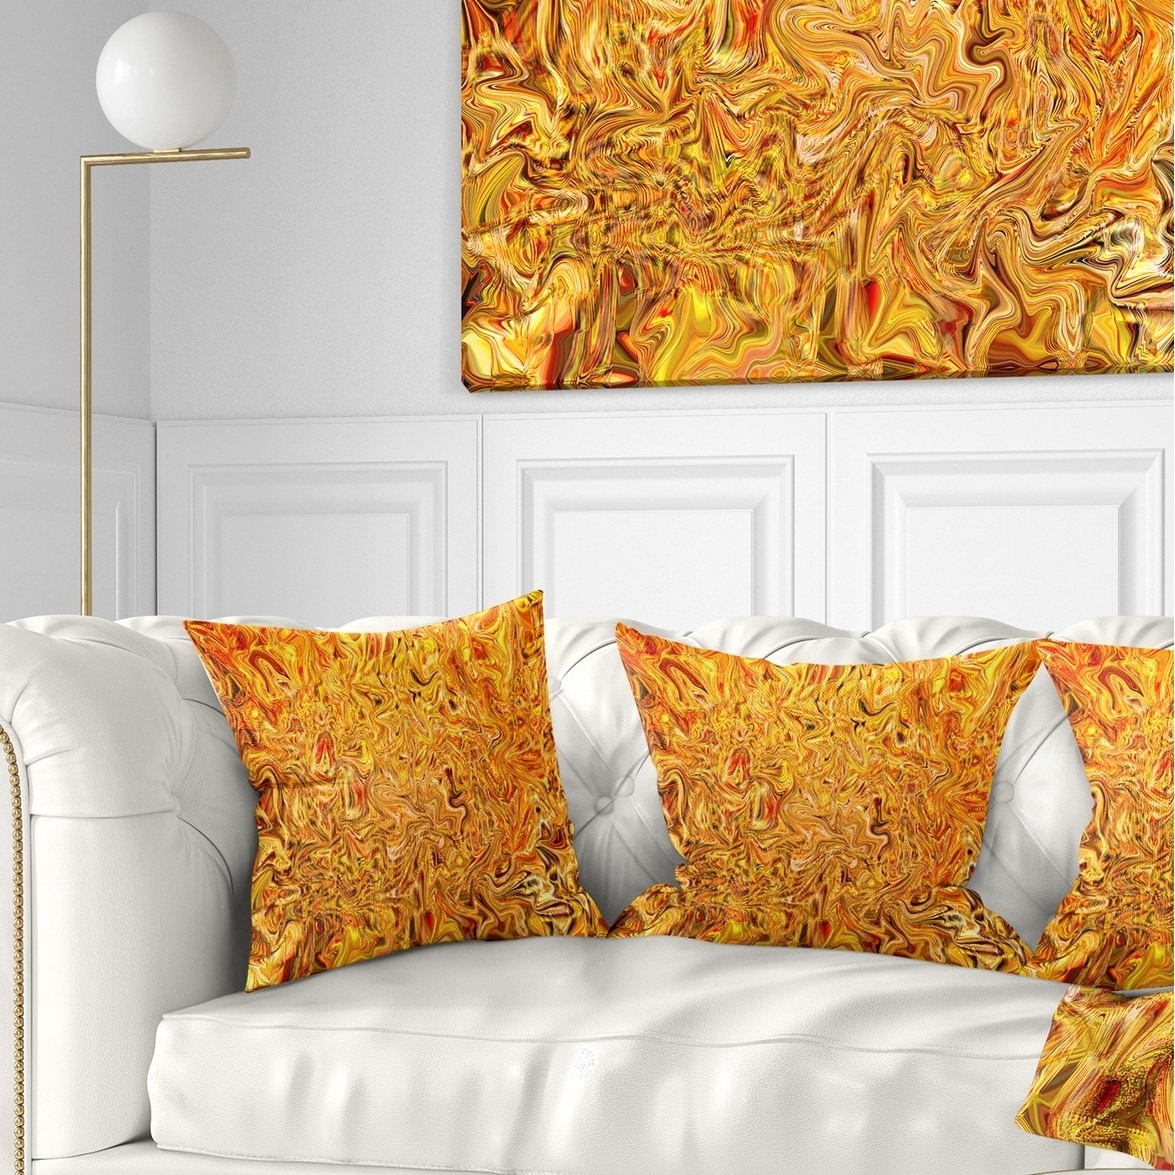 Designart 'Textured Flowing Yellow' Contemporary Throw Pillow